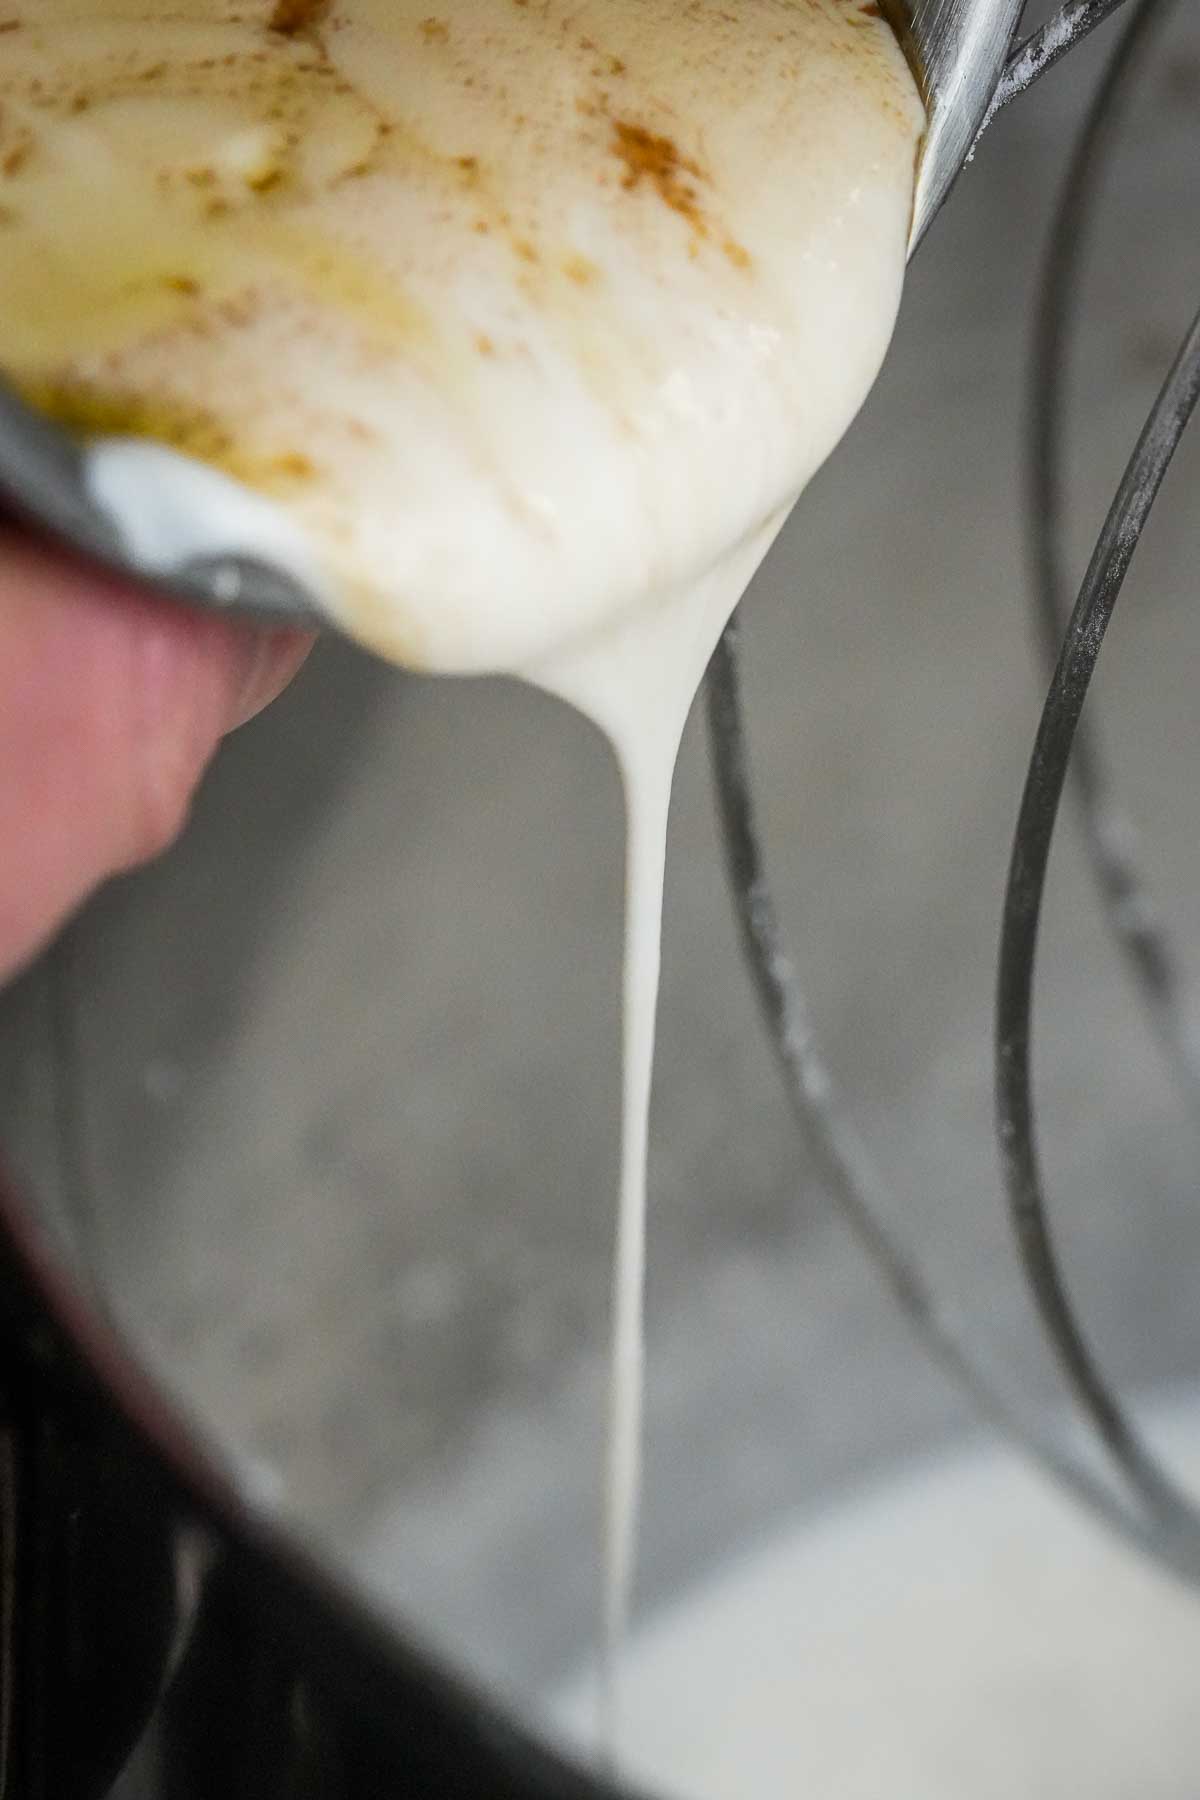 A person pouring vegan yogurt and vanilla into a mixing bowl.